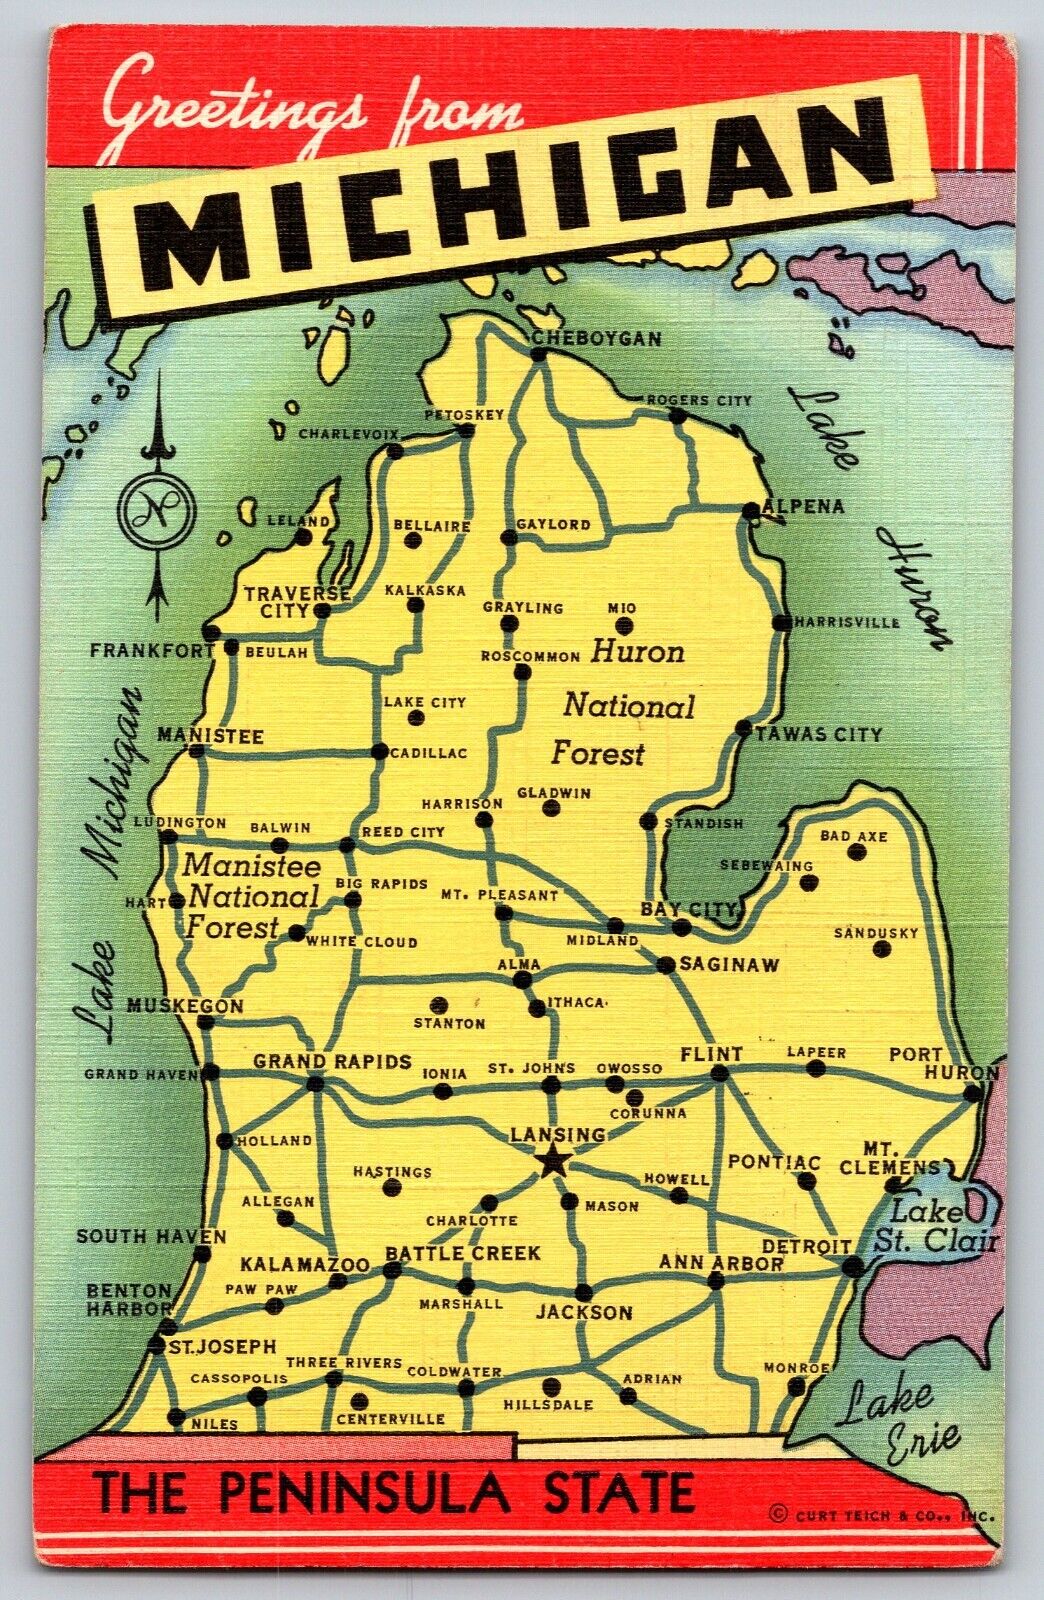 Michigan MI - Greetings - The Peninsula State - Vintage Postcard - Posted 1943